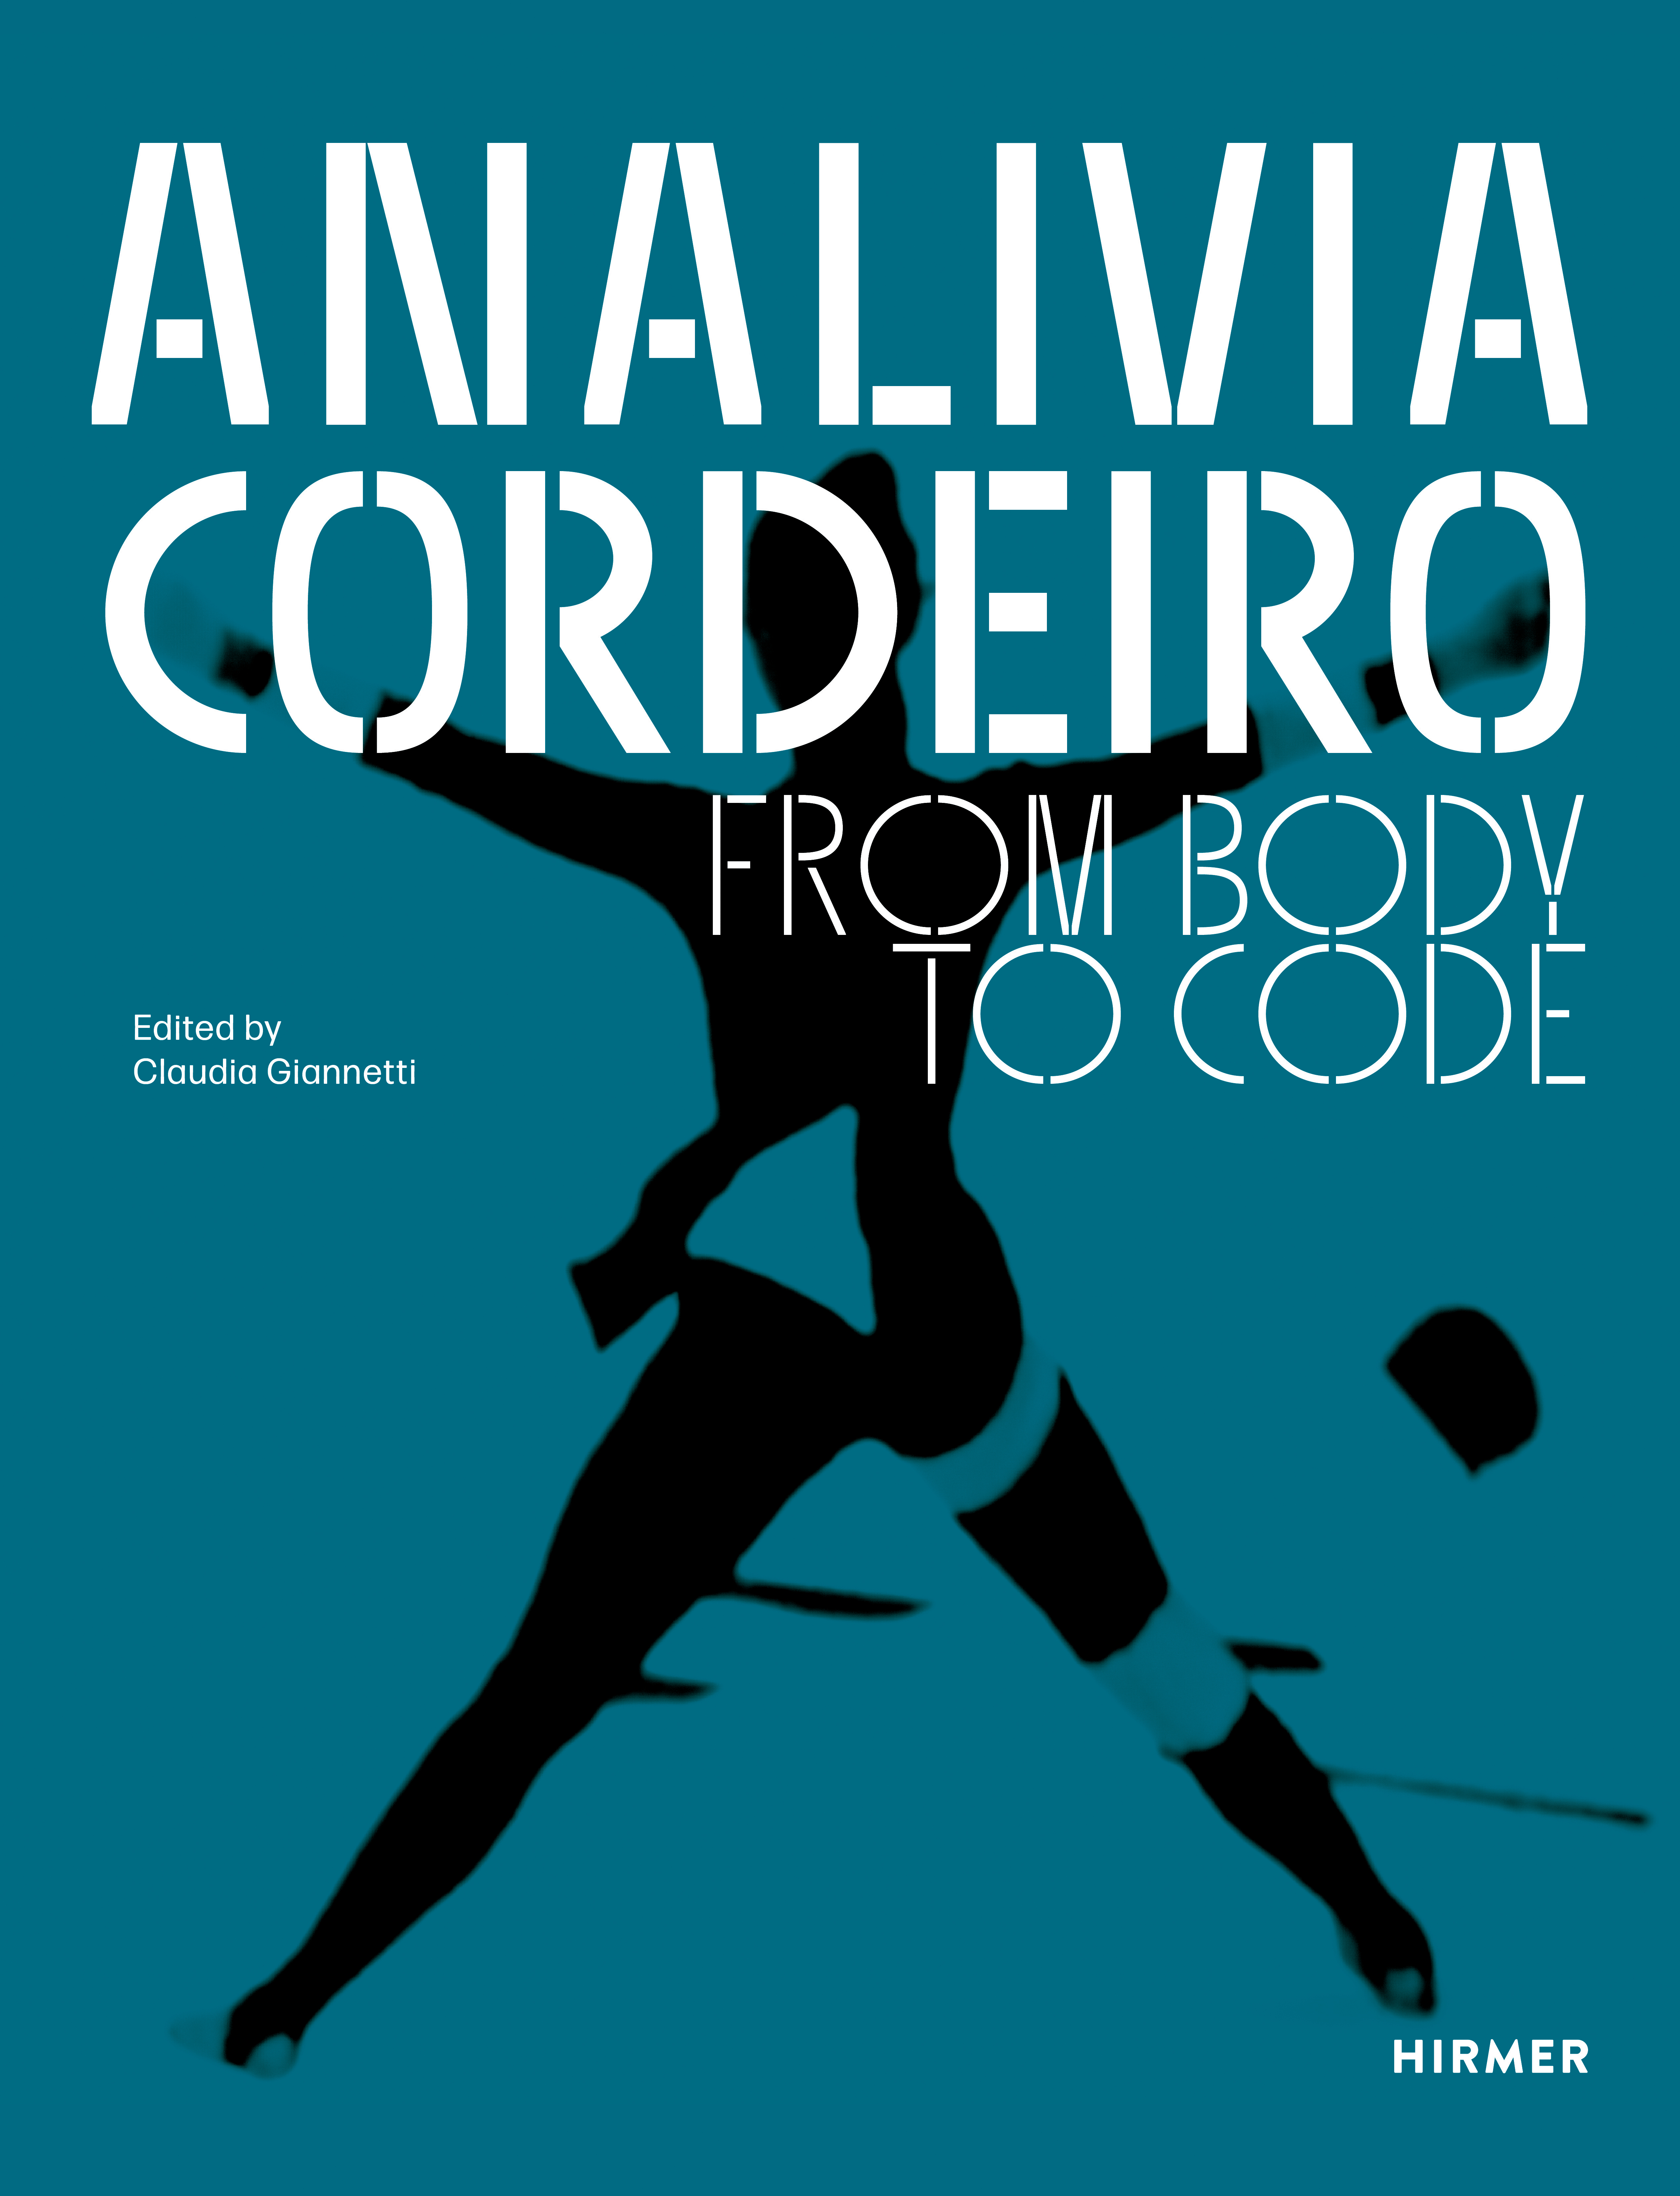 Analivia Cordeiro. From Body to Code